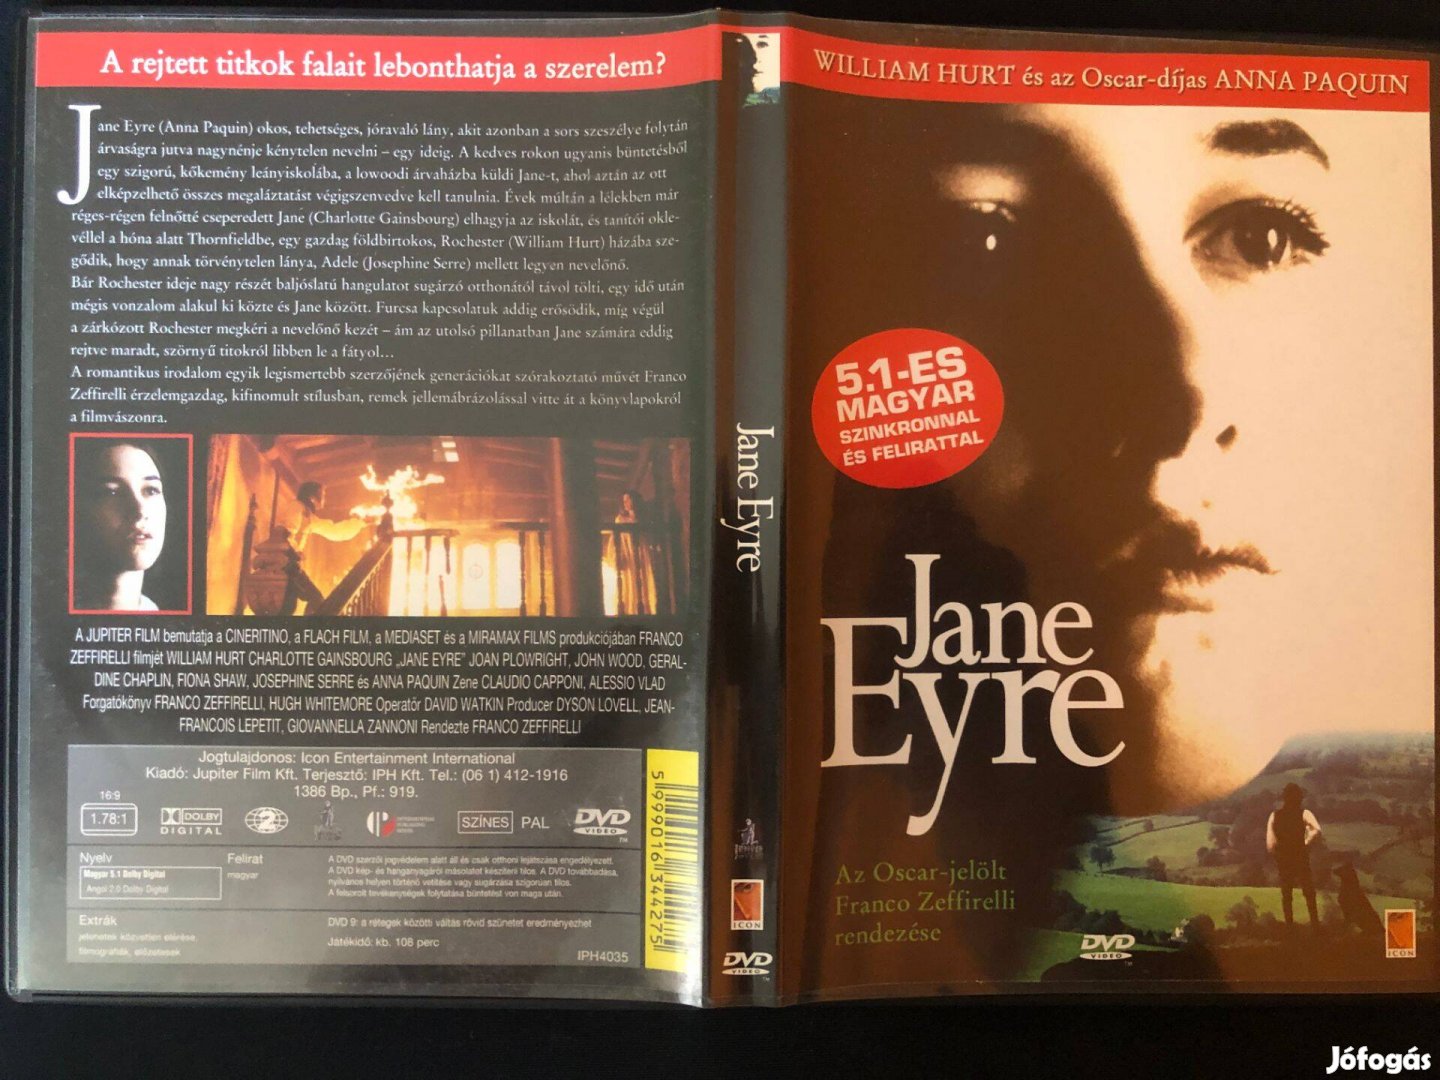 Jane Eyre (karcmentes, Franco Zefirelli, William Hurt) DVD